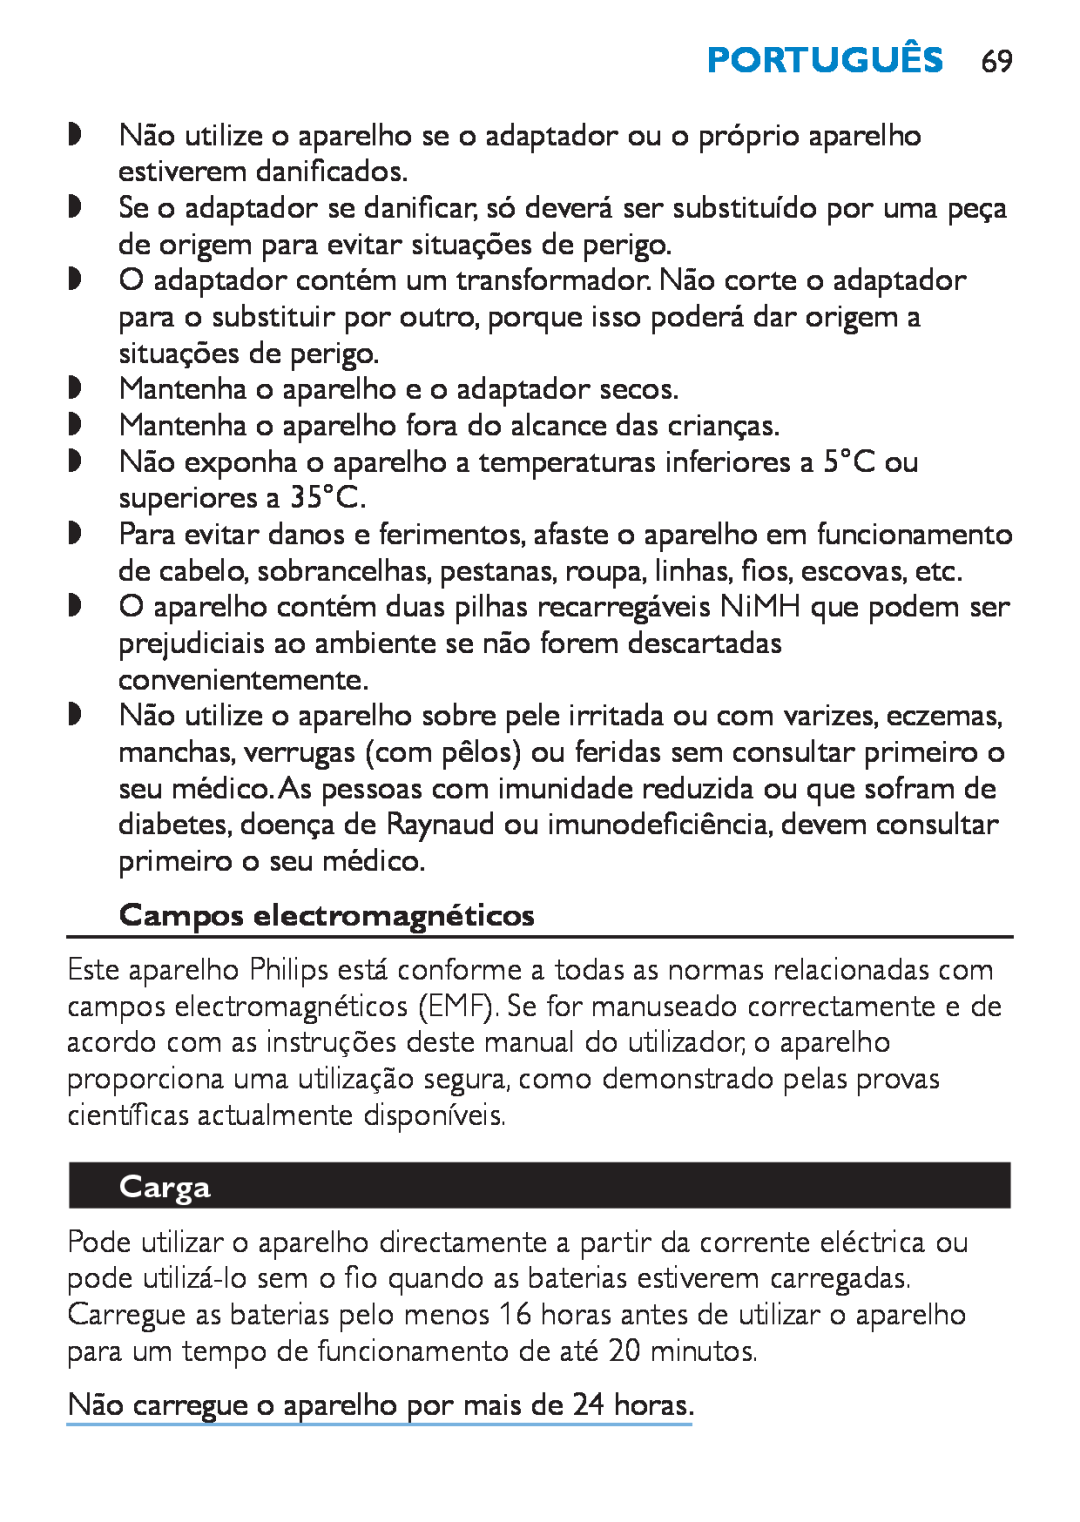 Philips HP6490 manual Português, Campos electromagnéticos, Carga 